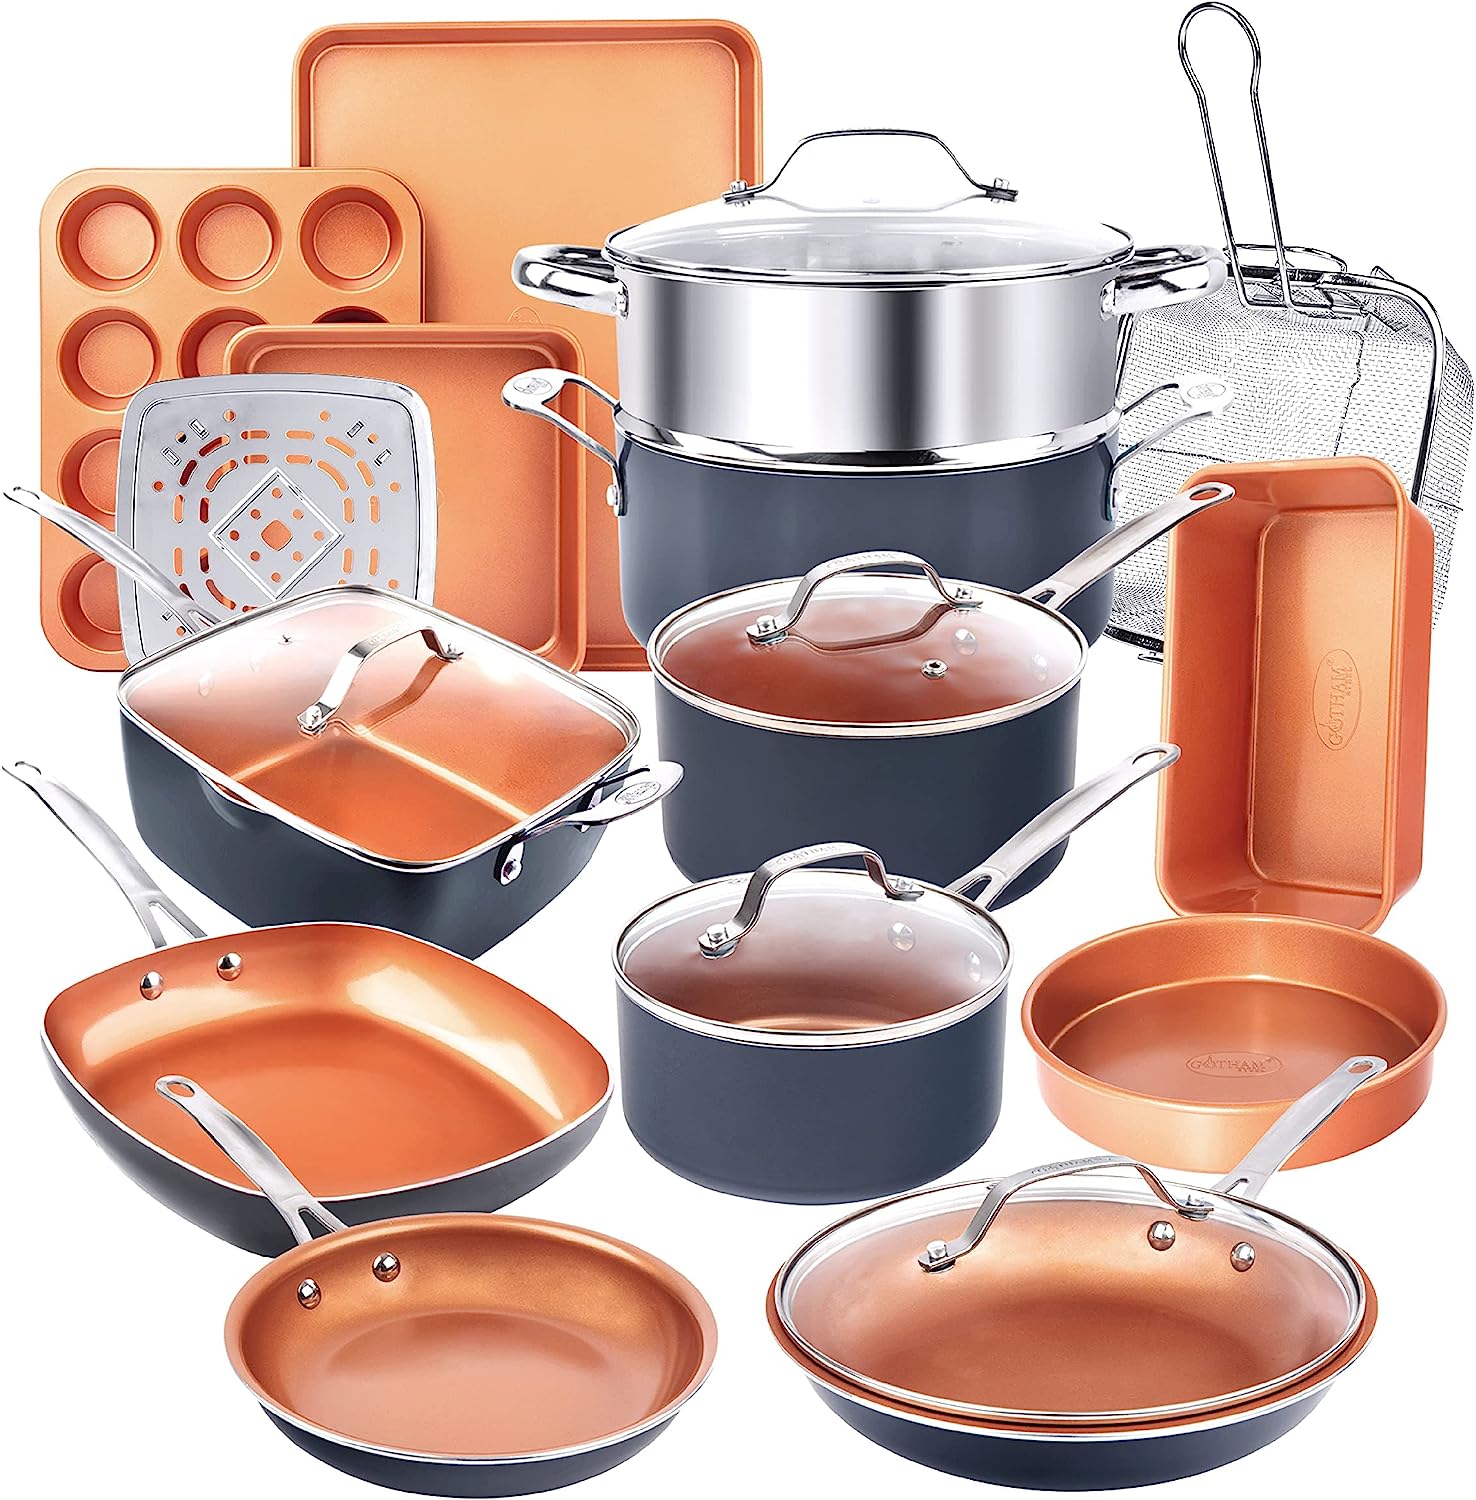 copper ceramic cookware review